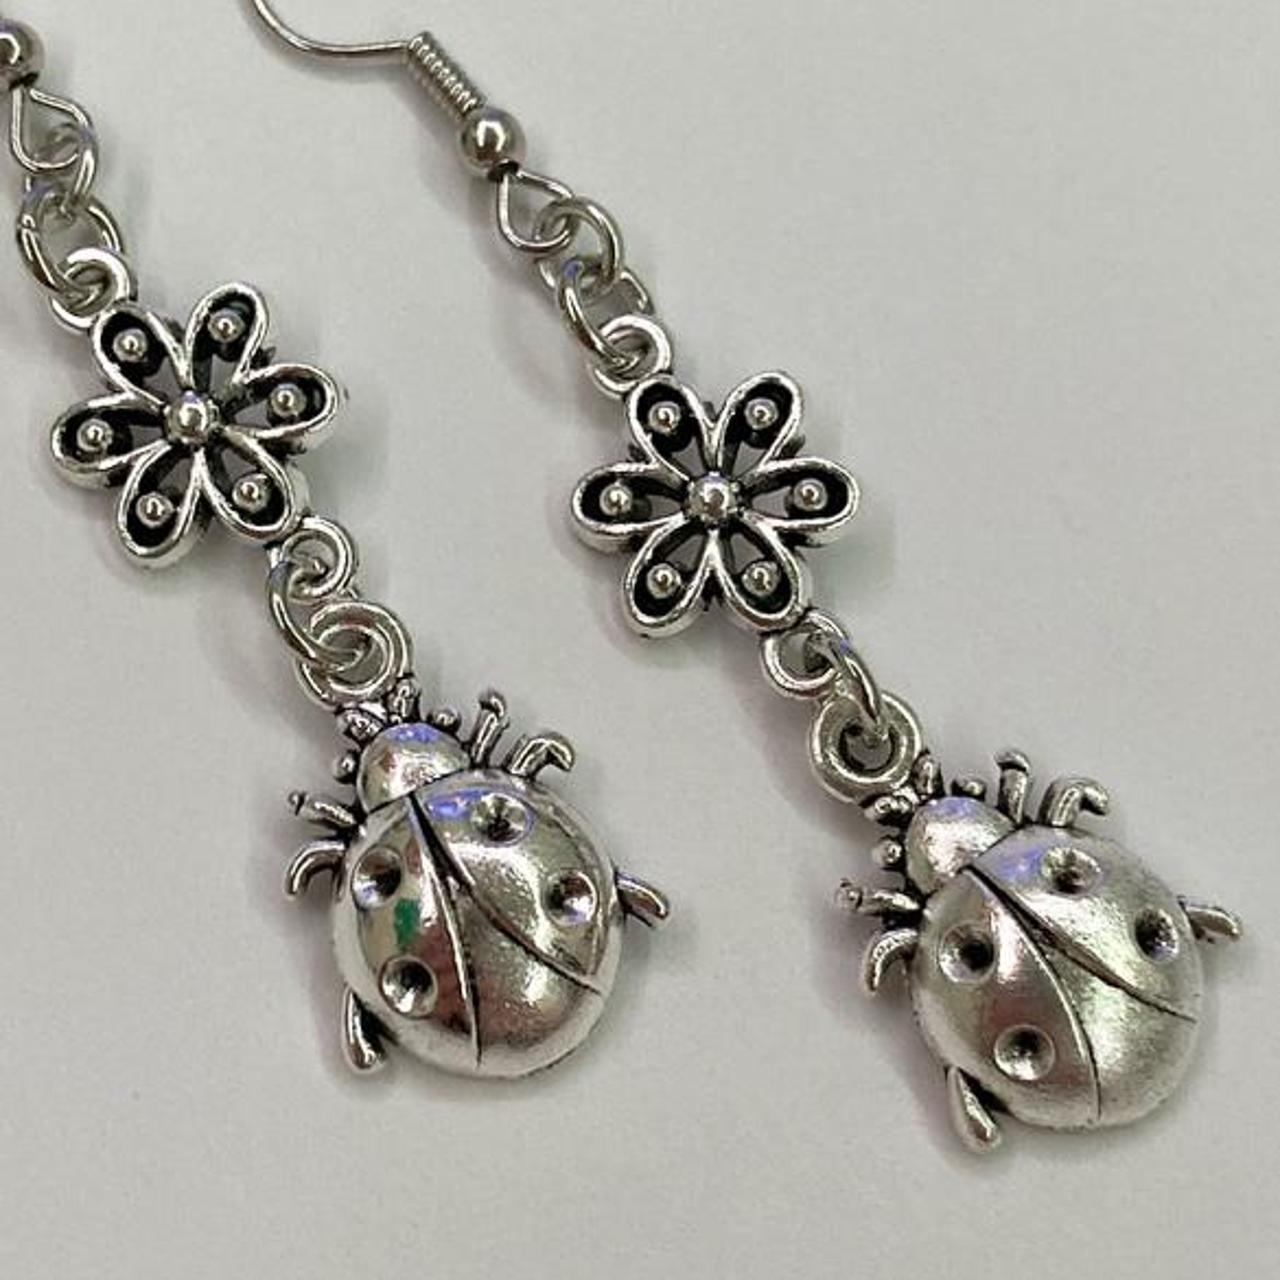 Product Image 3 - Floral Ladybug Earrings 🐞
Handmade silver